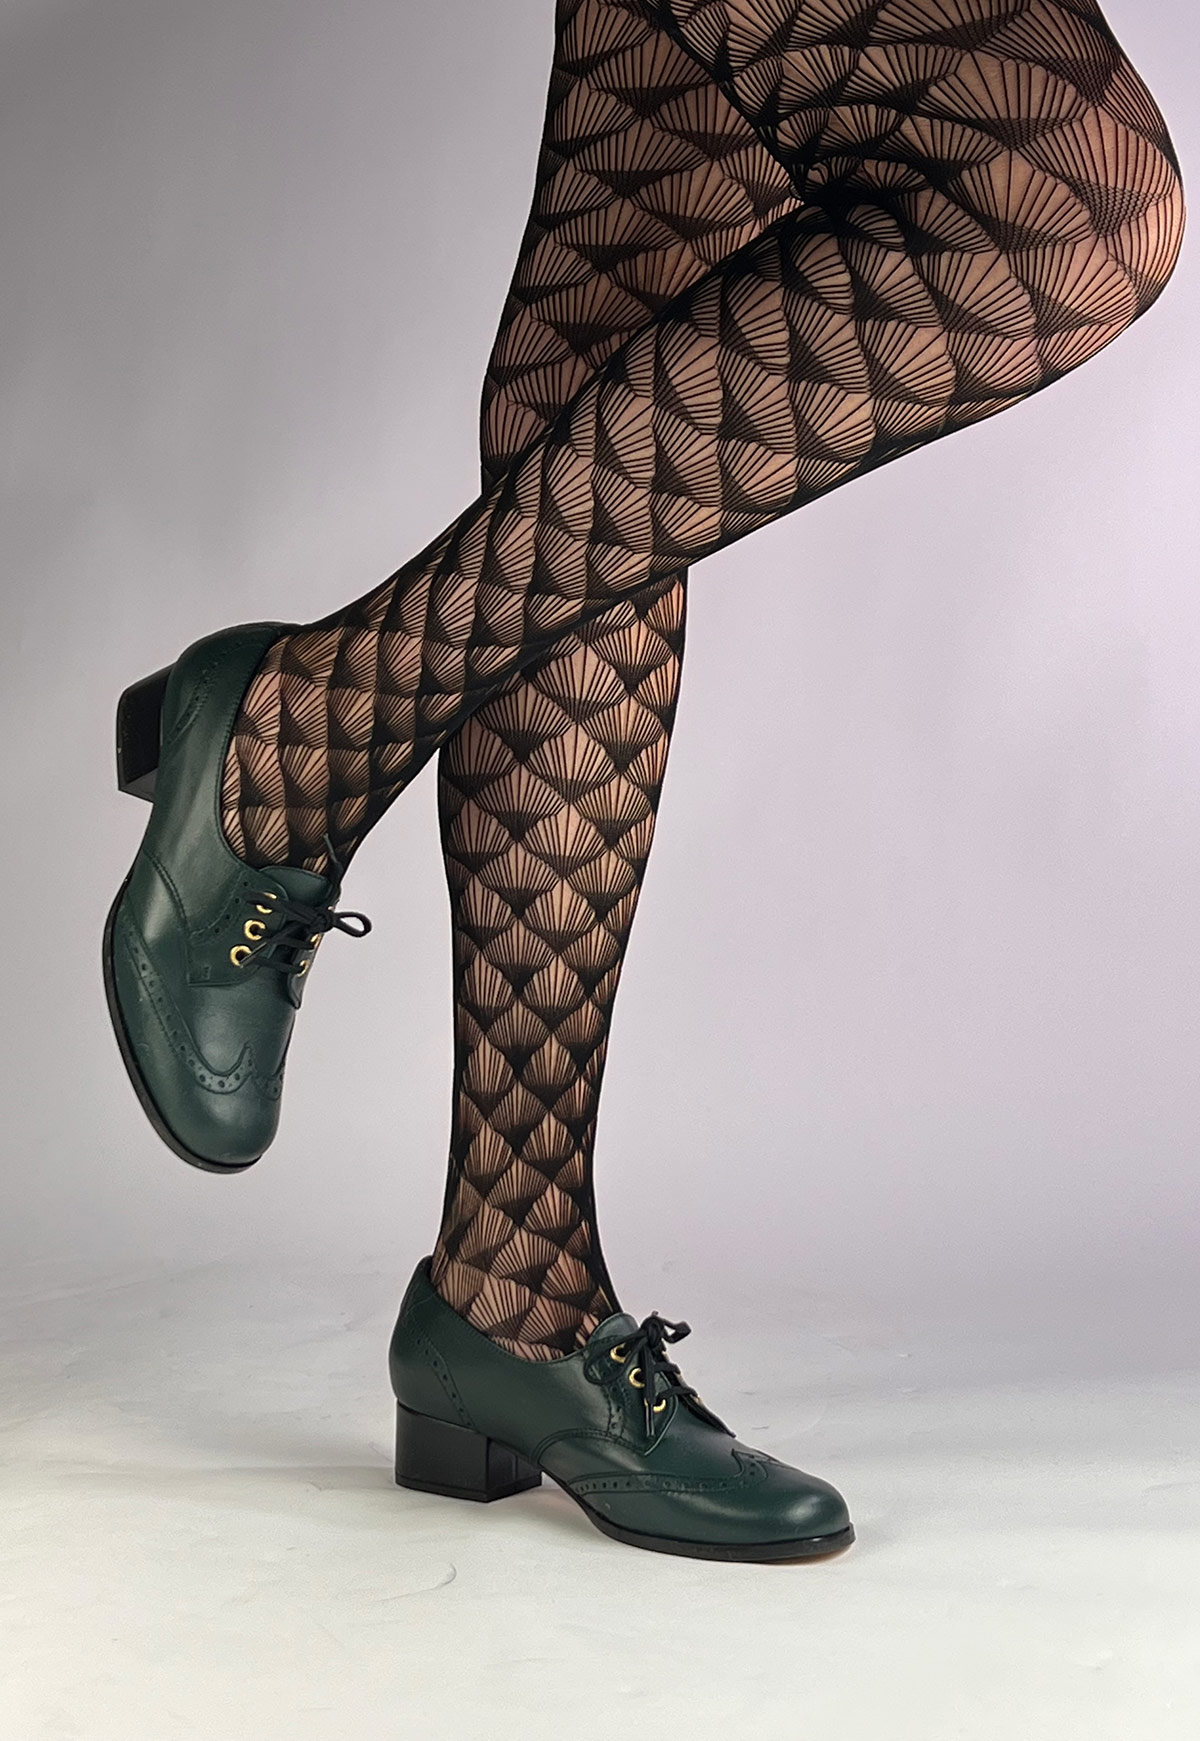 Deco Pattern Net Tights - ladies vintage retro 60s - 70s style